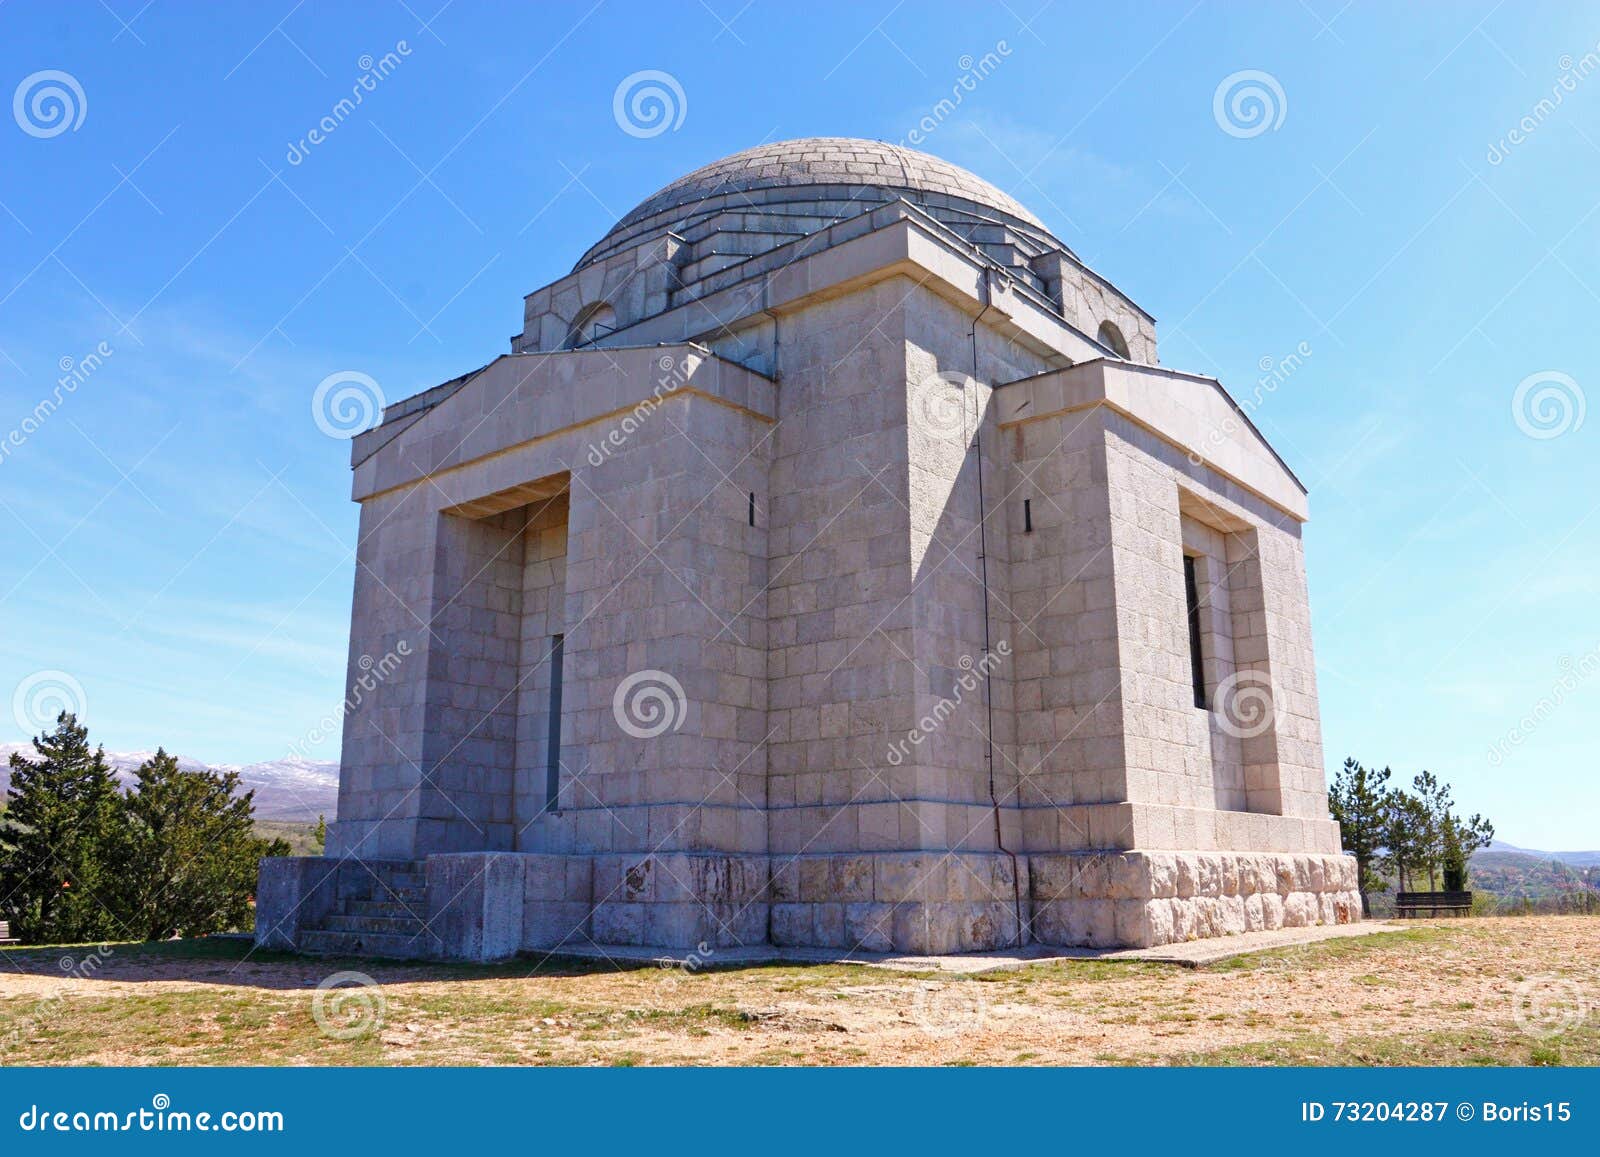 mestrovic family mausoleum